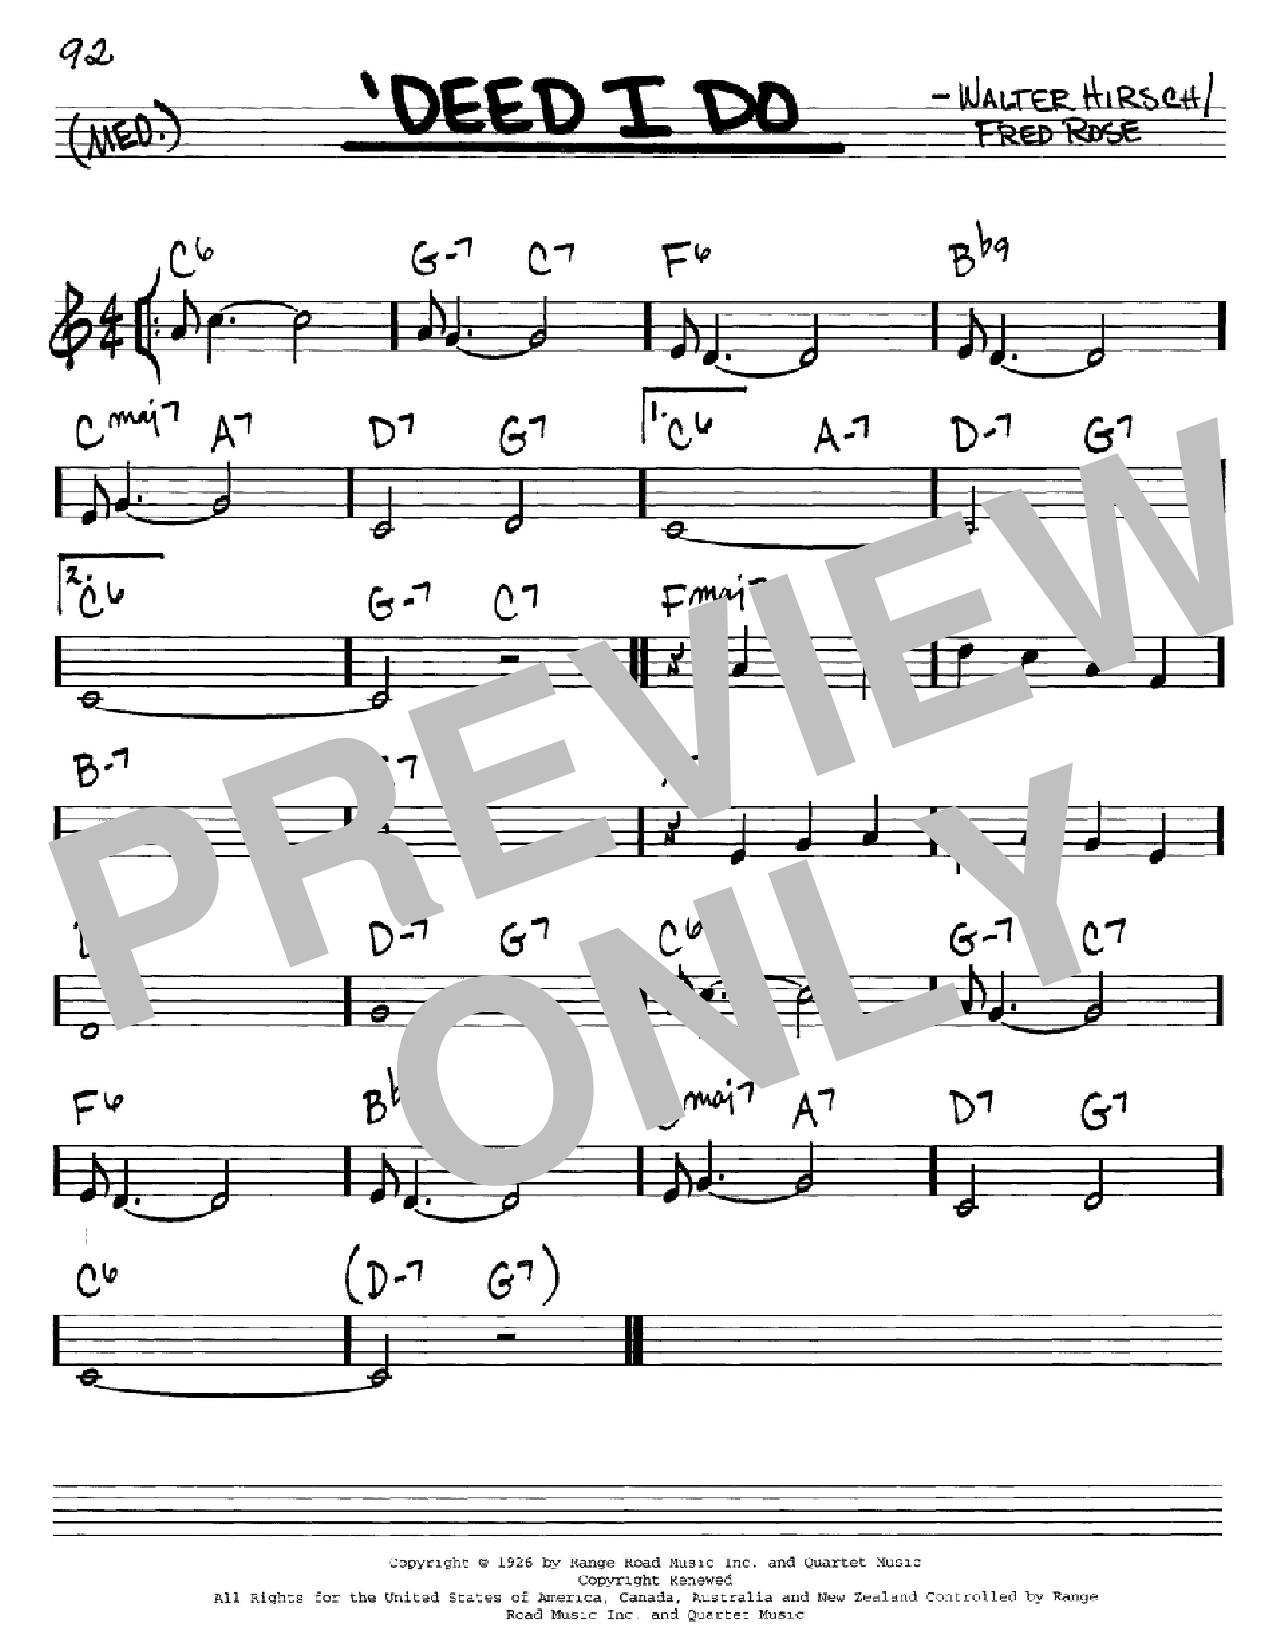 Walter Hirsch 'Deed I Do sheet music notes printable PDF score